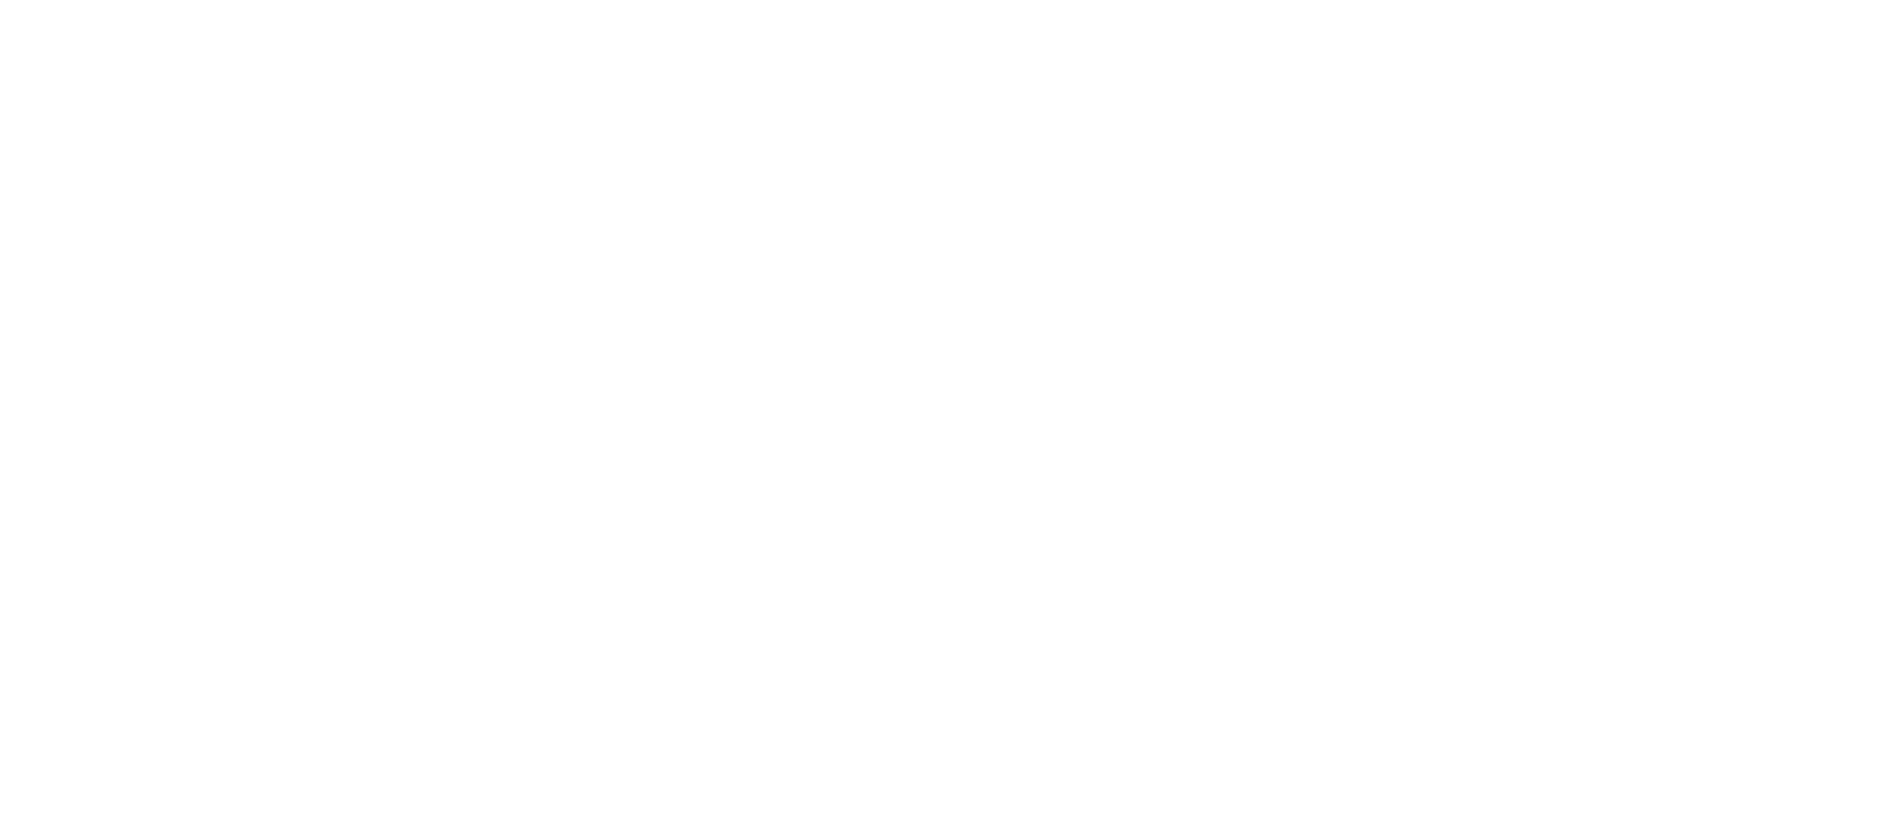 DataGalaxy white logo horizontal